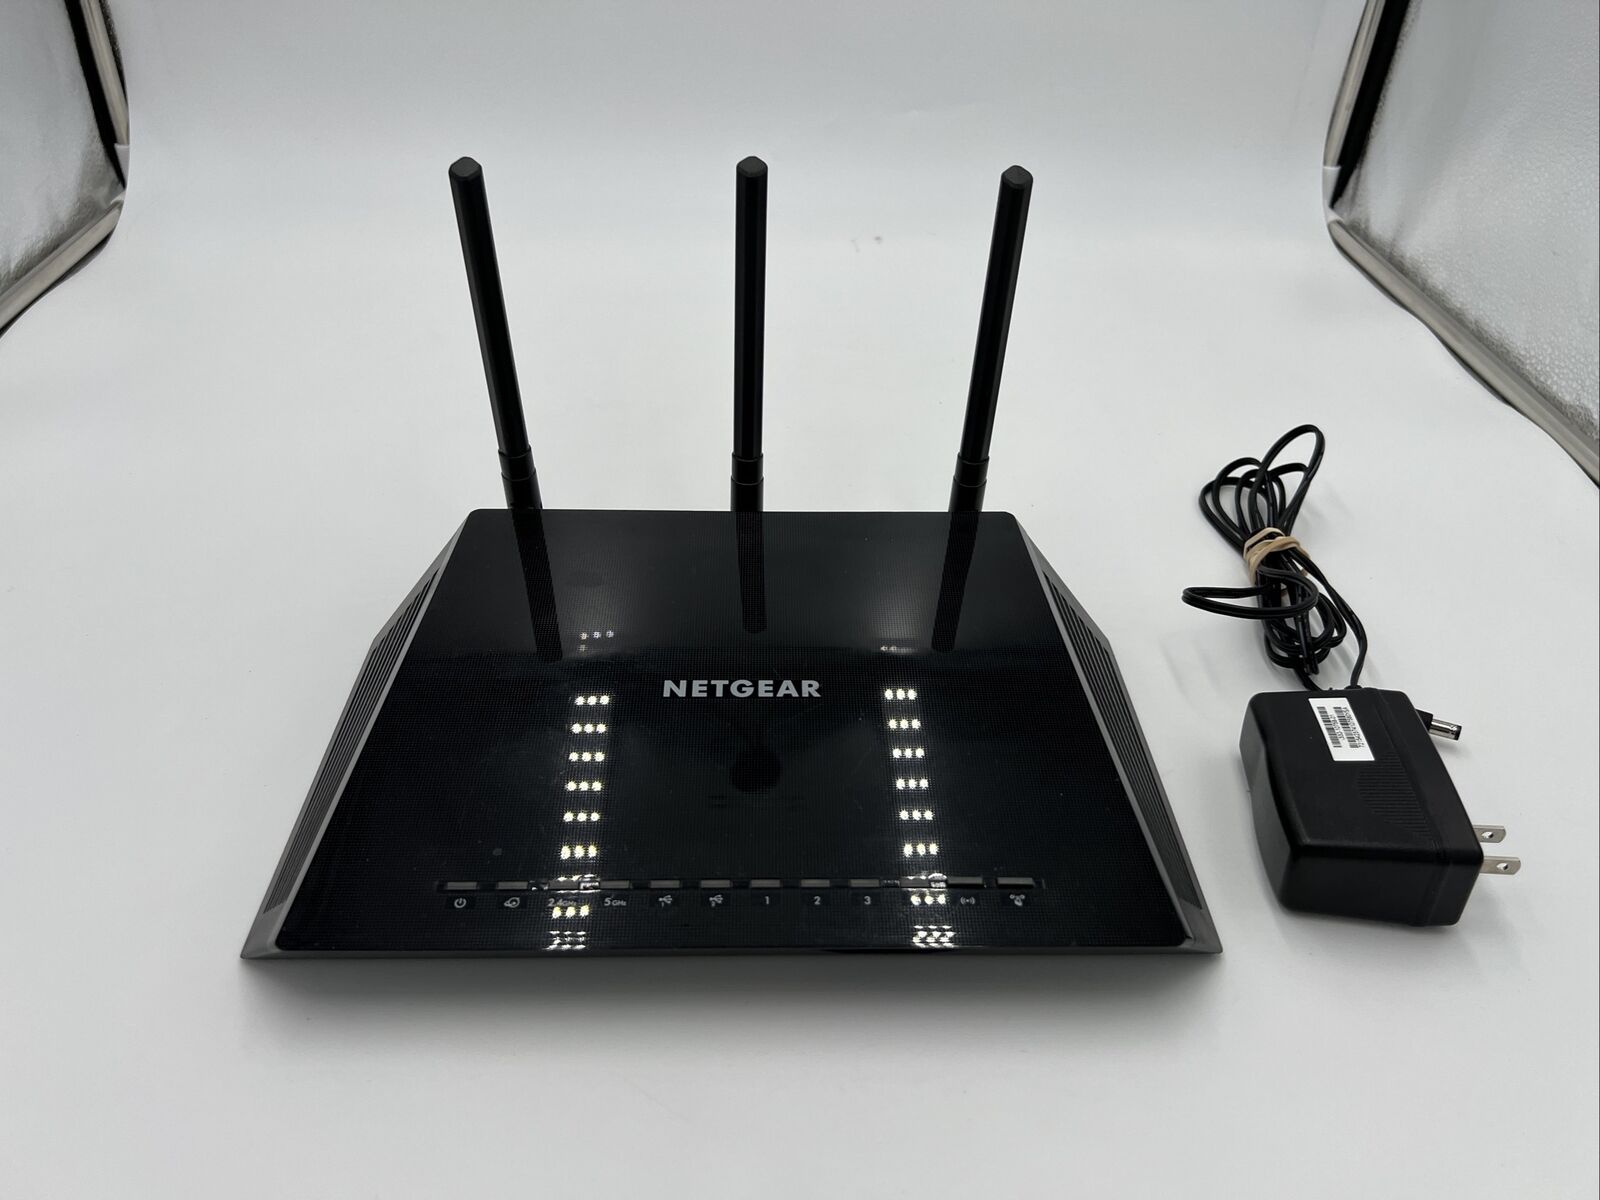 NETGEAR R6400-100NAS AC1750 Smart WiFi Dual Band Gigabit Router 800MHz